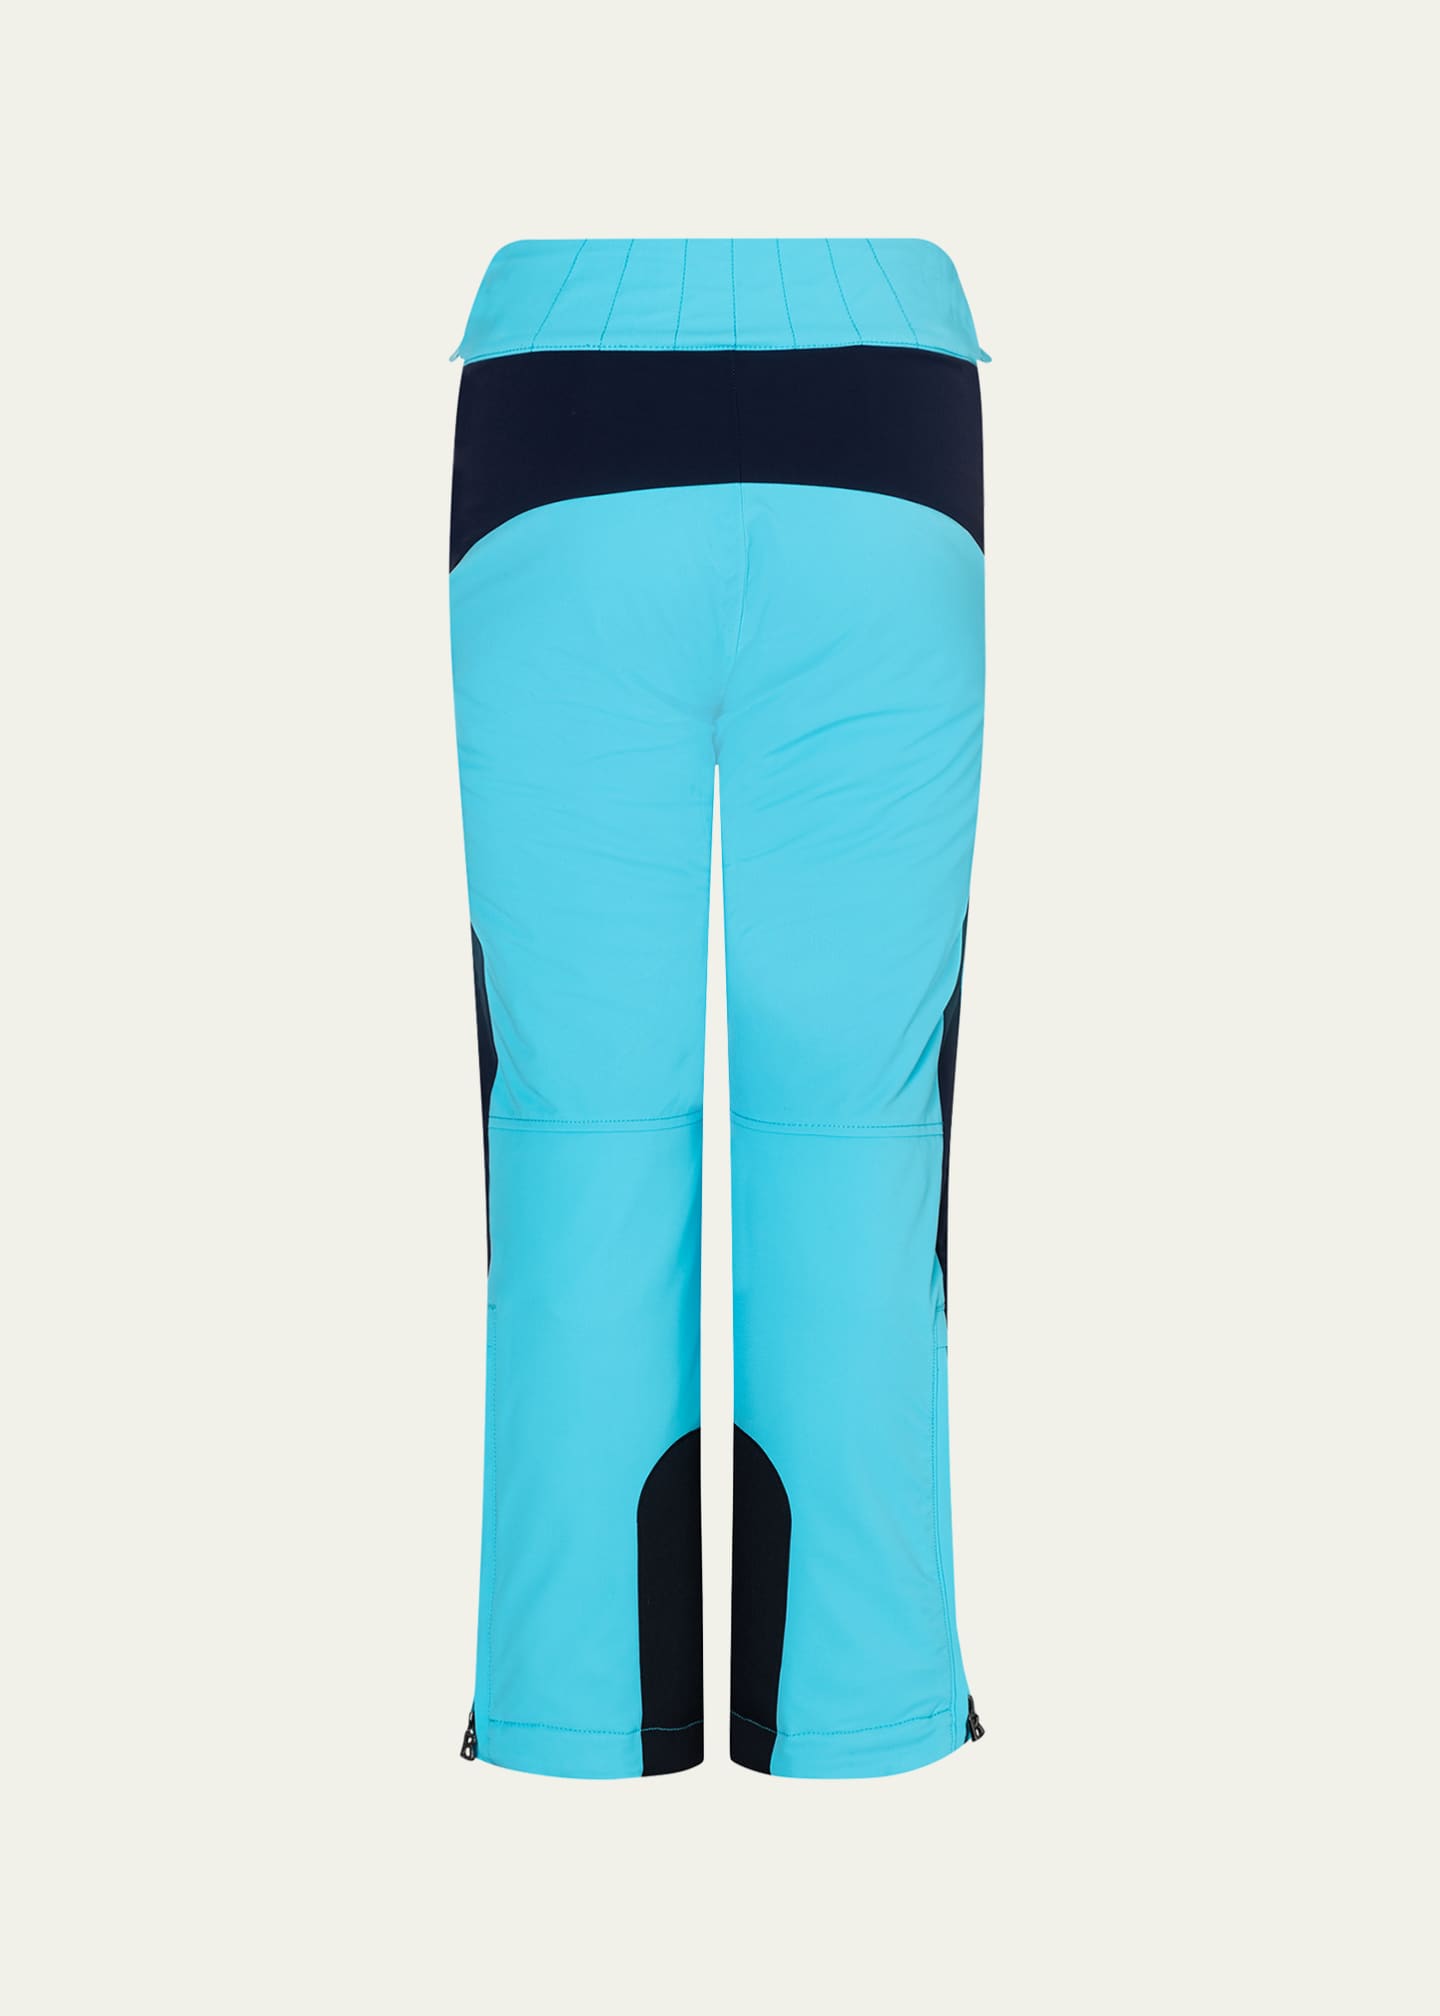 Topshop Sno slim leg ski pants with stirrups in blue